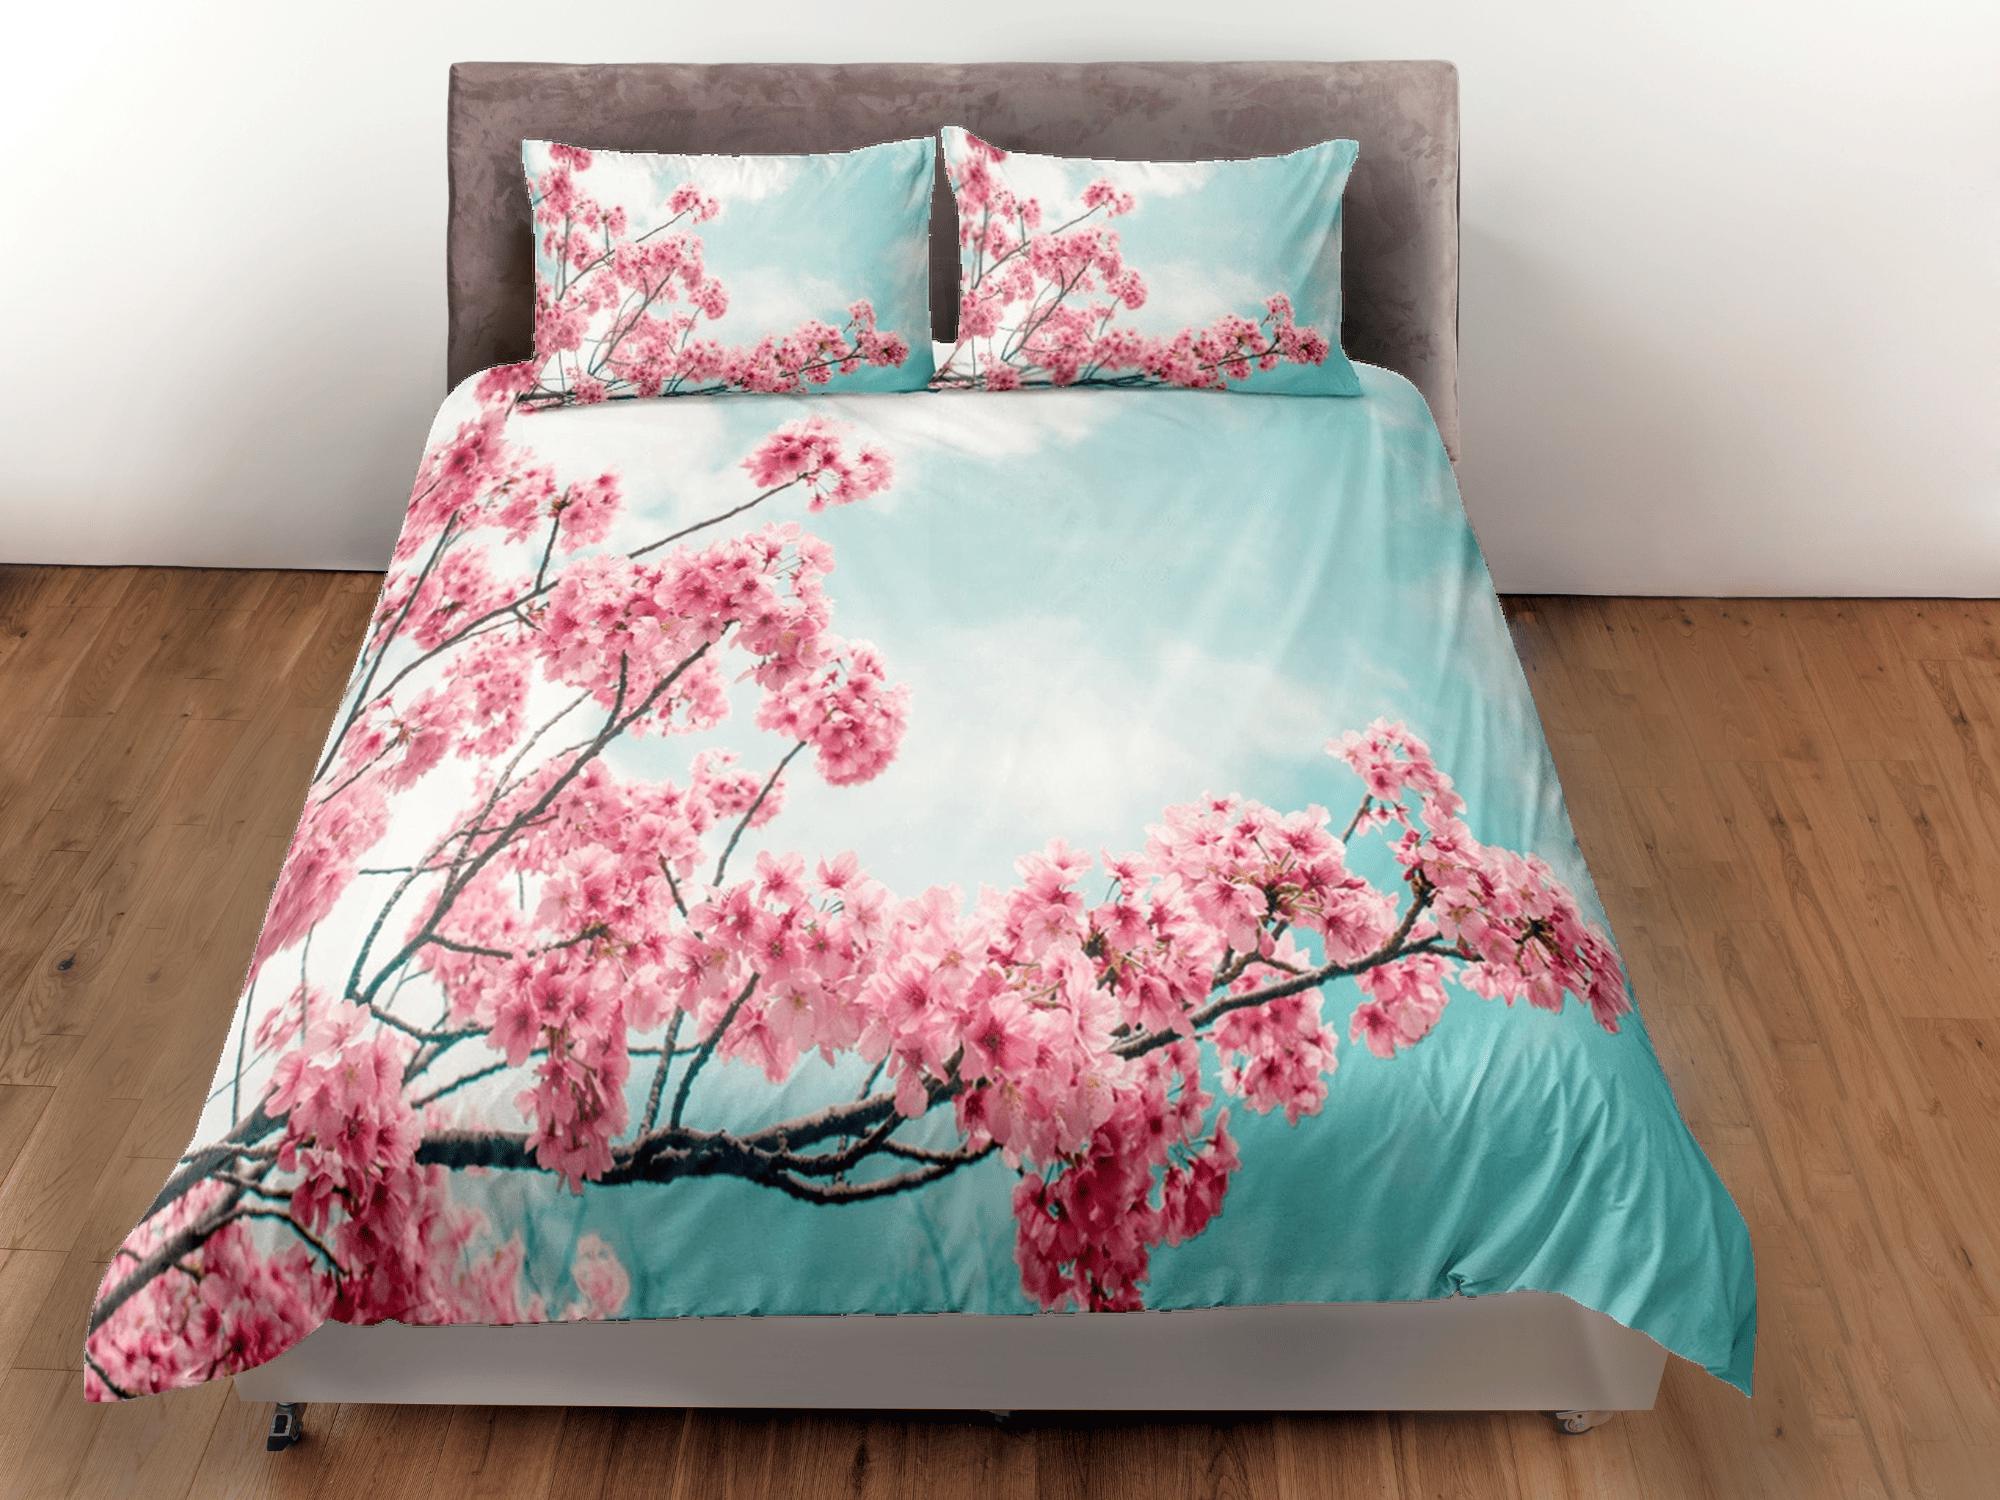 daintyduvet Blue sky pink cherry blossom bedding floral prints duvet cover queen, king, boho bedding designer maximalist full size bedding aesthetic